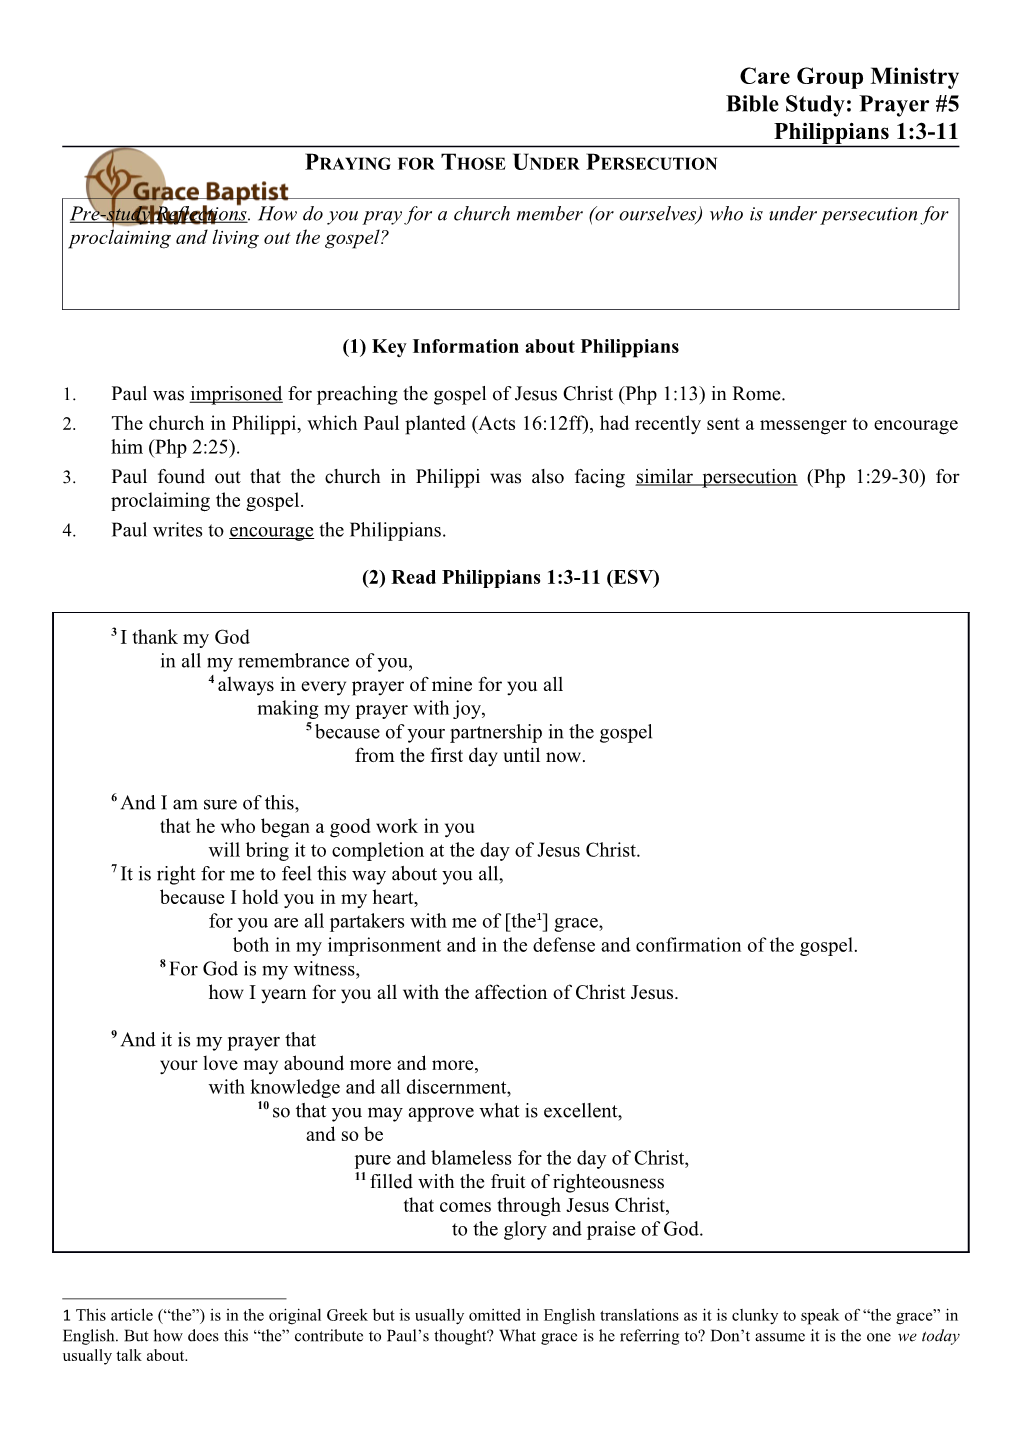 (1) Key Information About Philippians